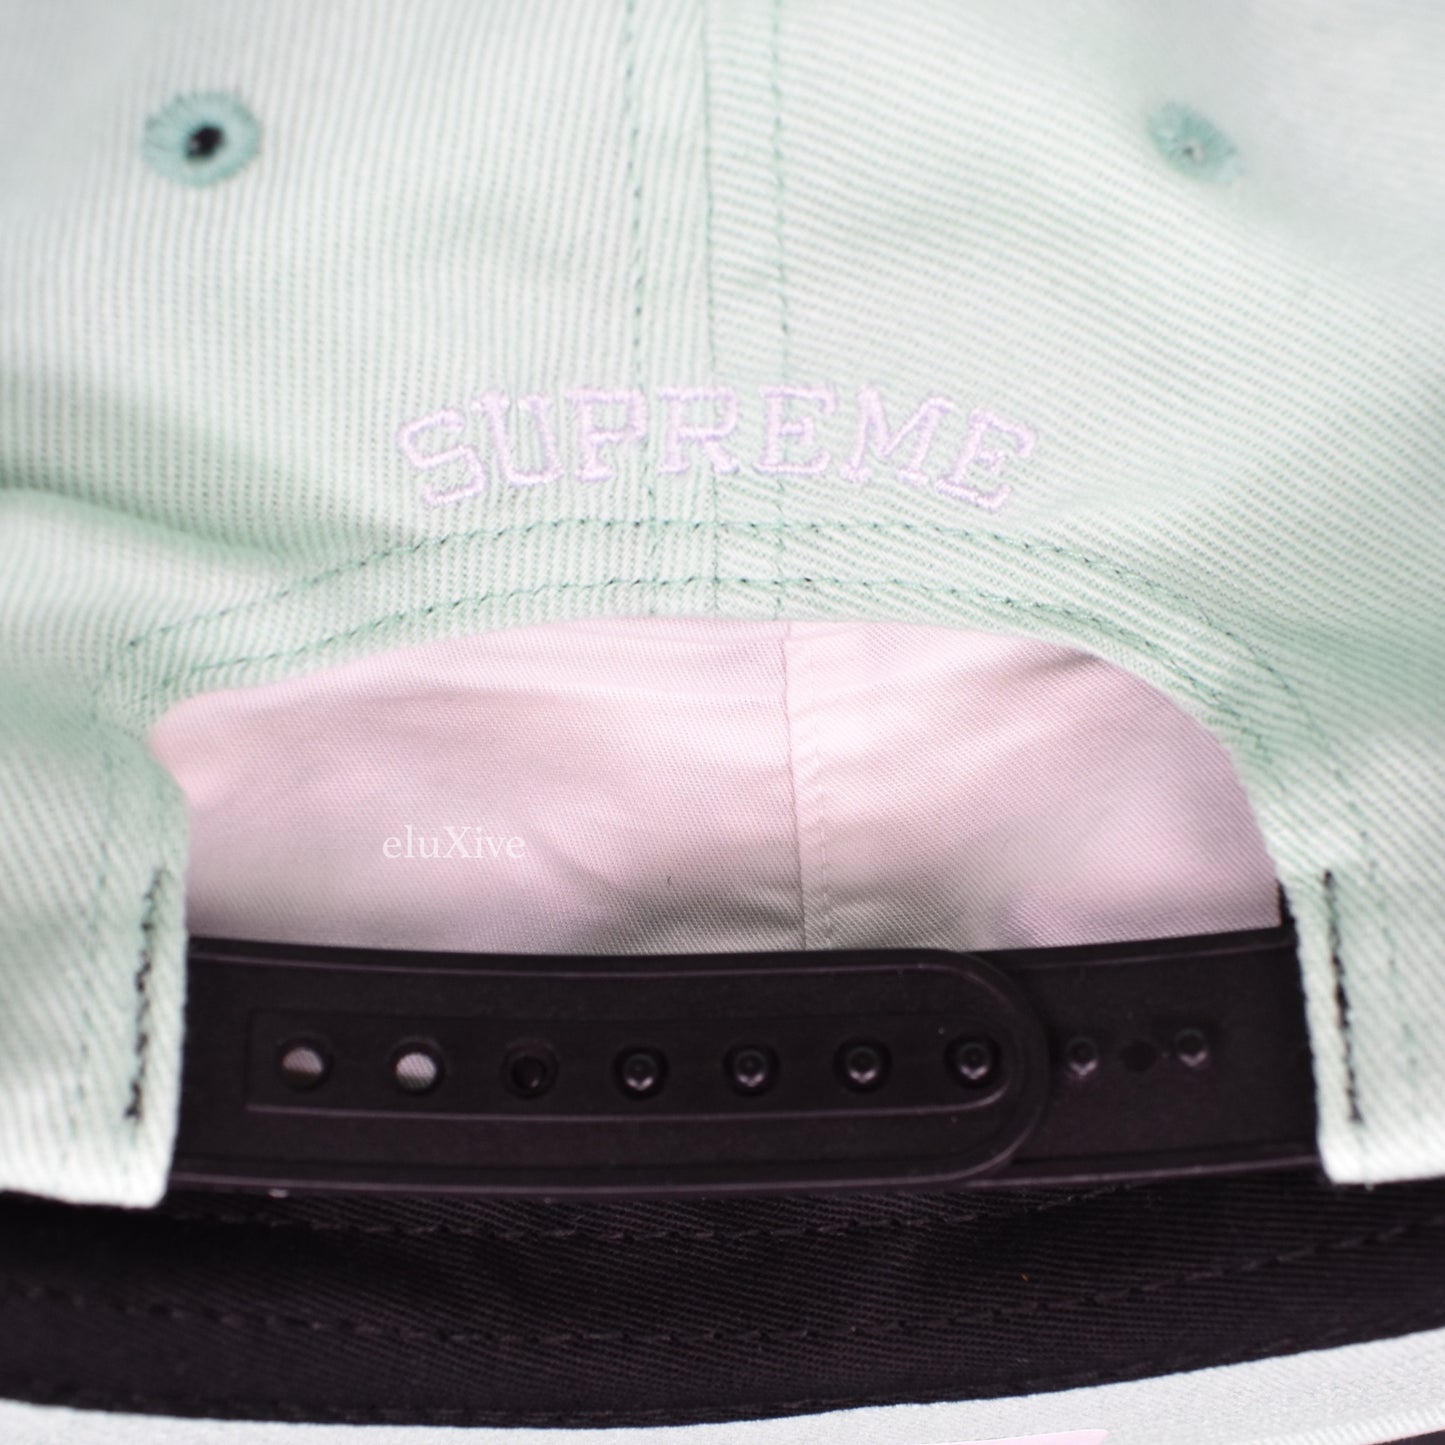 Supreme - Mint Green 'Friends' Logo Hat